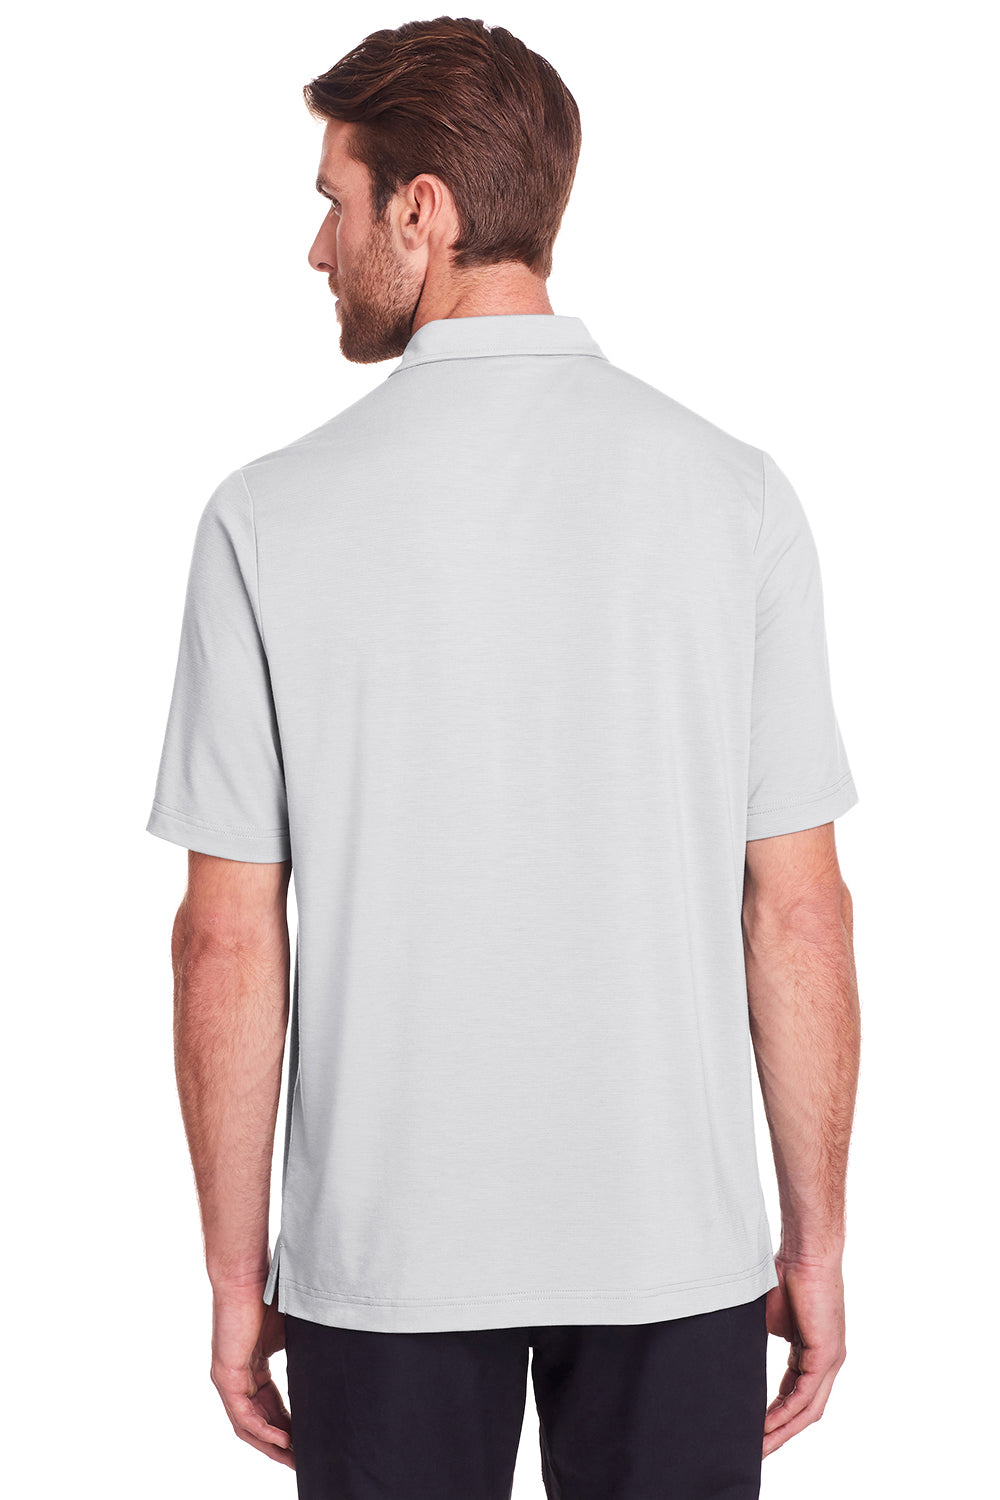 North End NE100 Mens Jaq Performance Moisture Wicking Short Sleeve Polo Shirt Platinum Grey Back